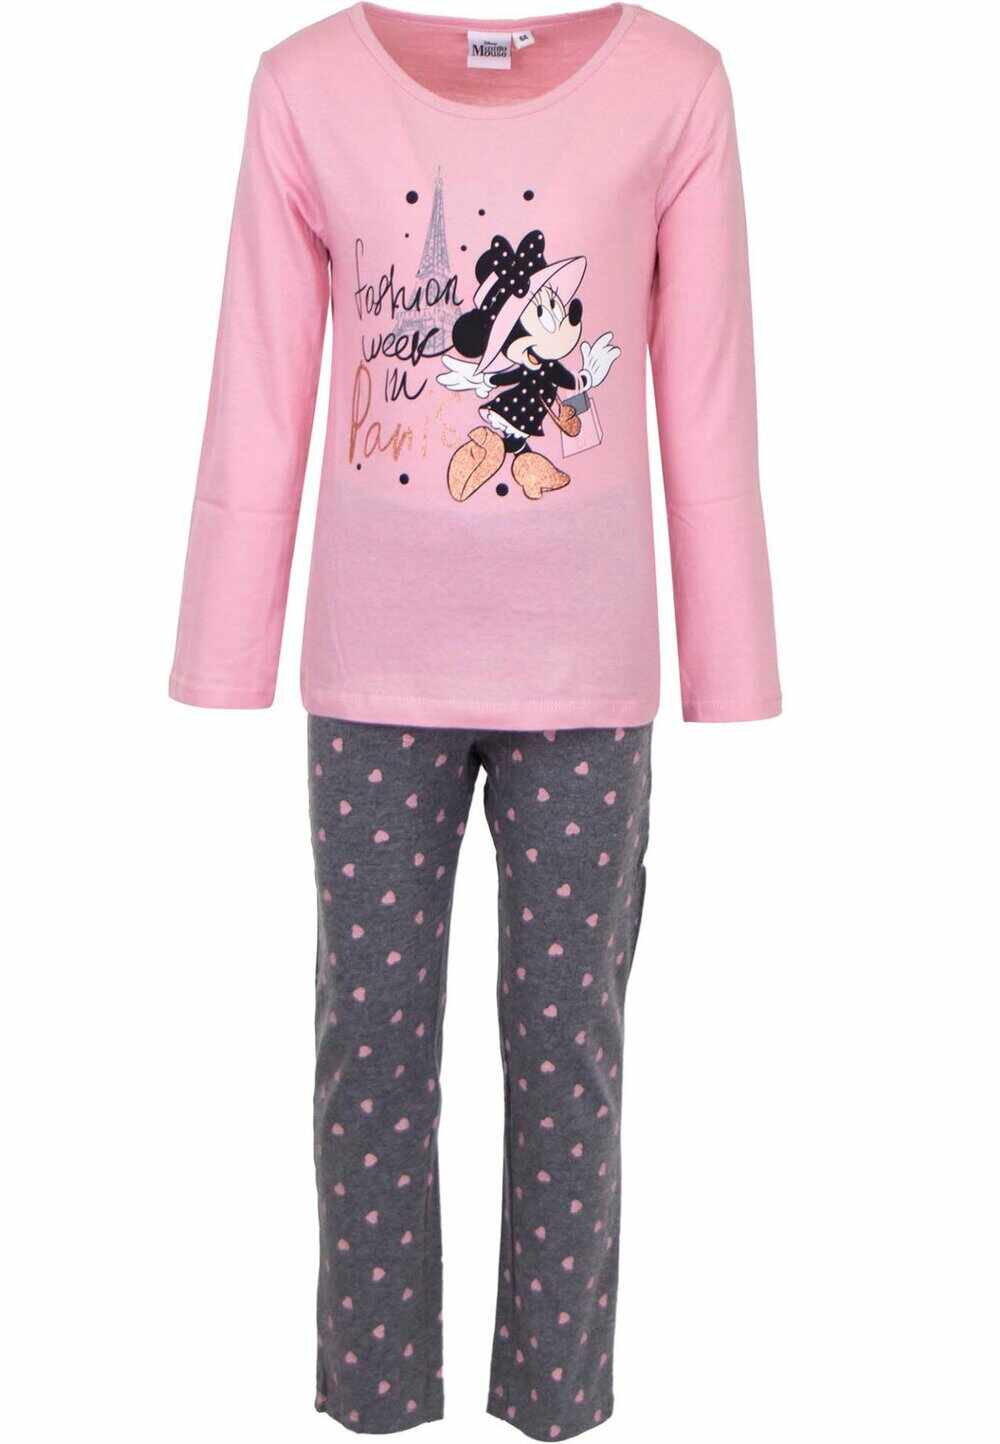 Pijama maneca lunga, bumbac, cu imprimeu, Minnie, Paris, roz